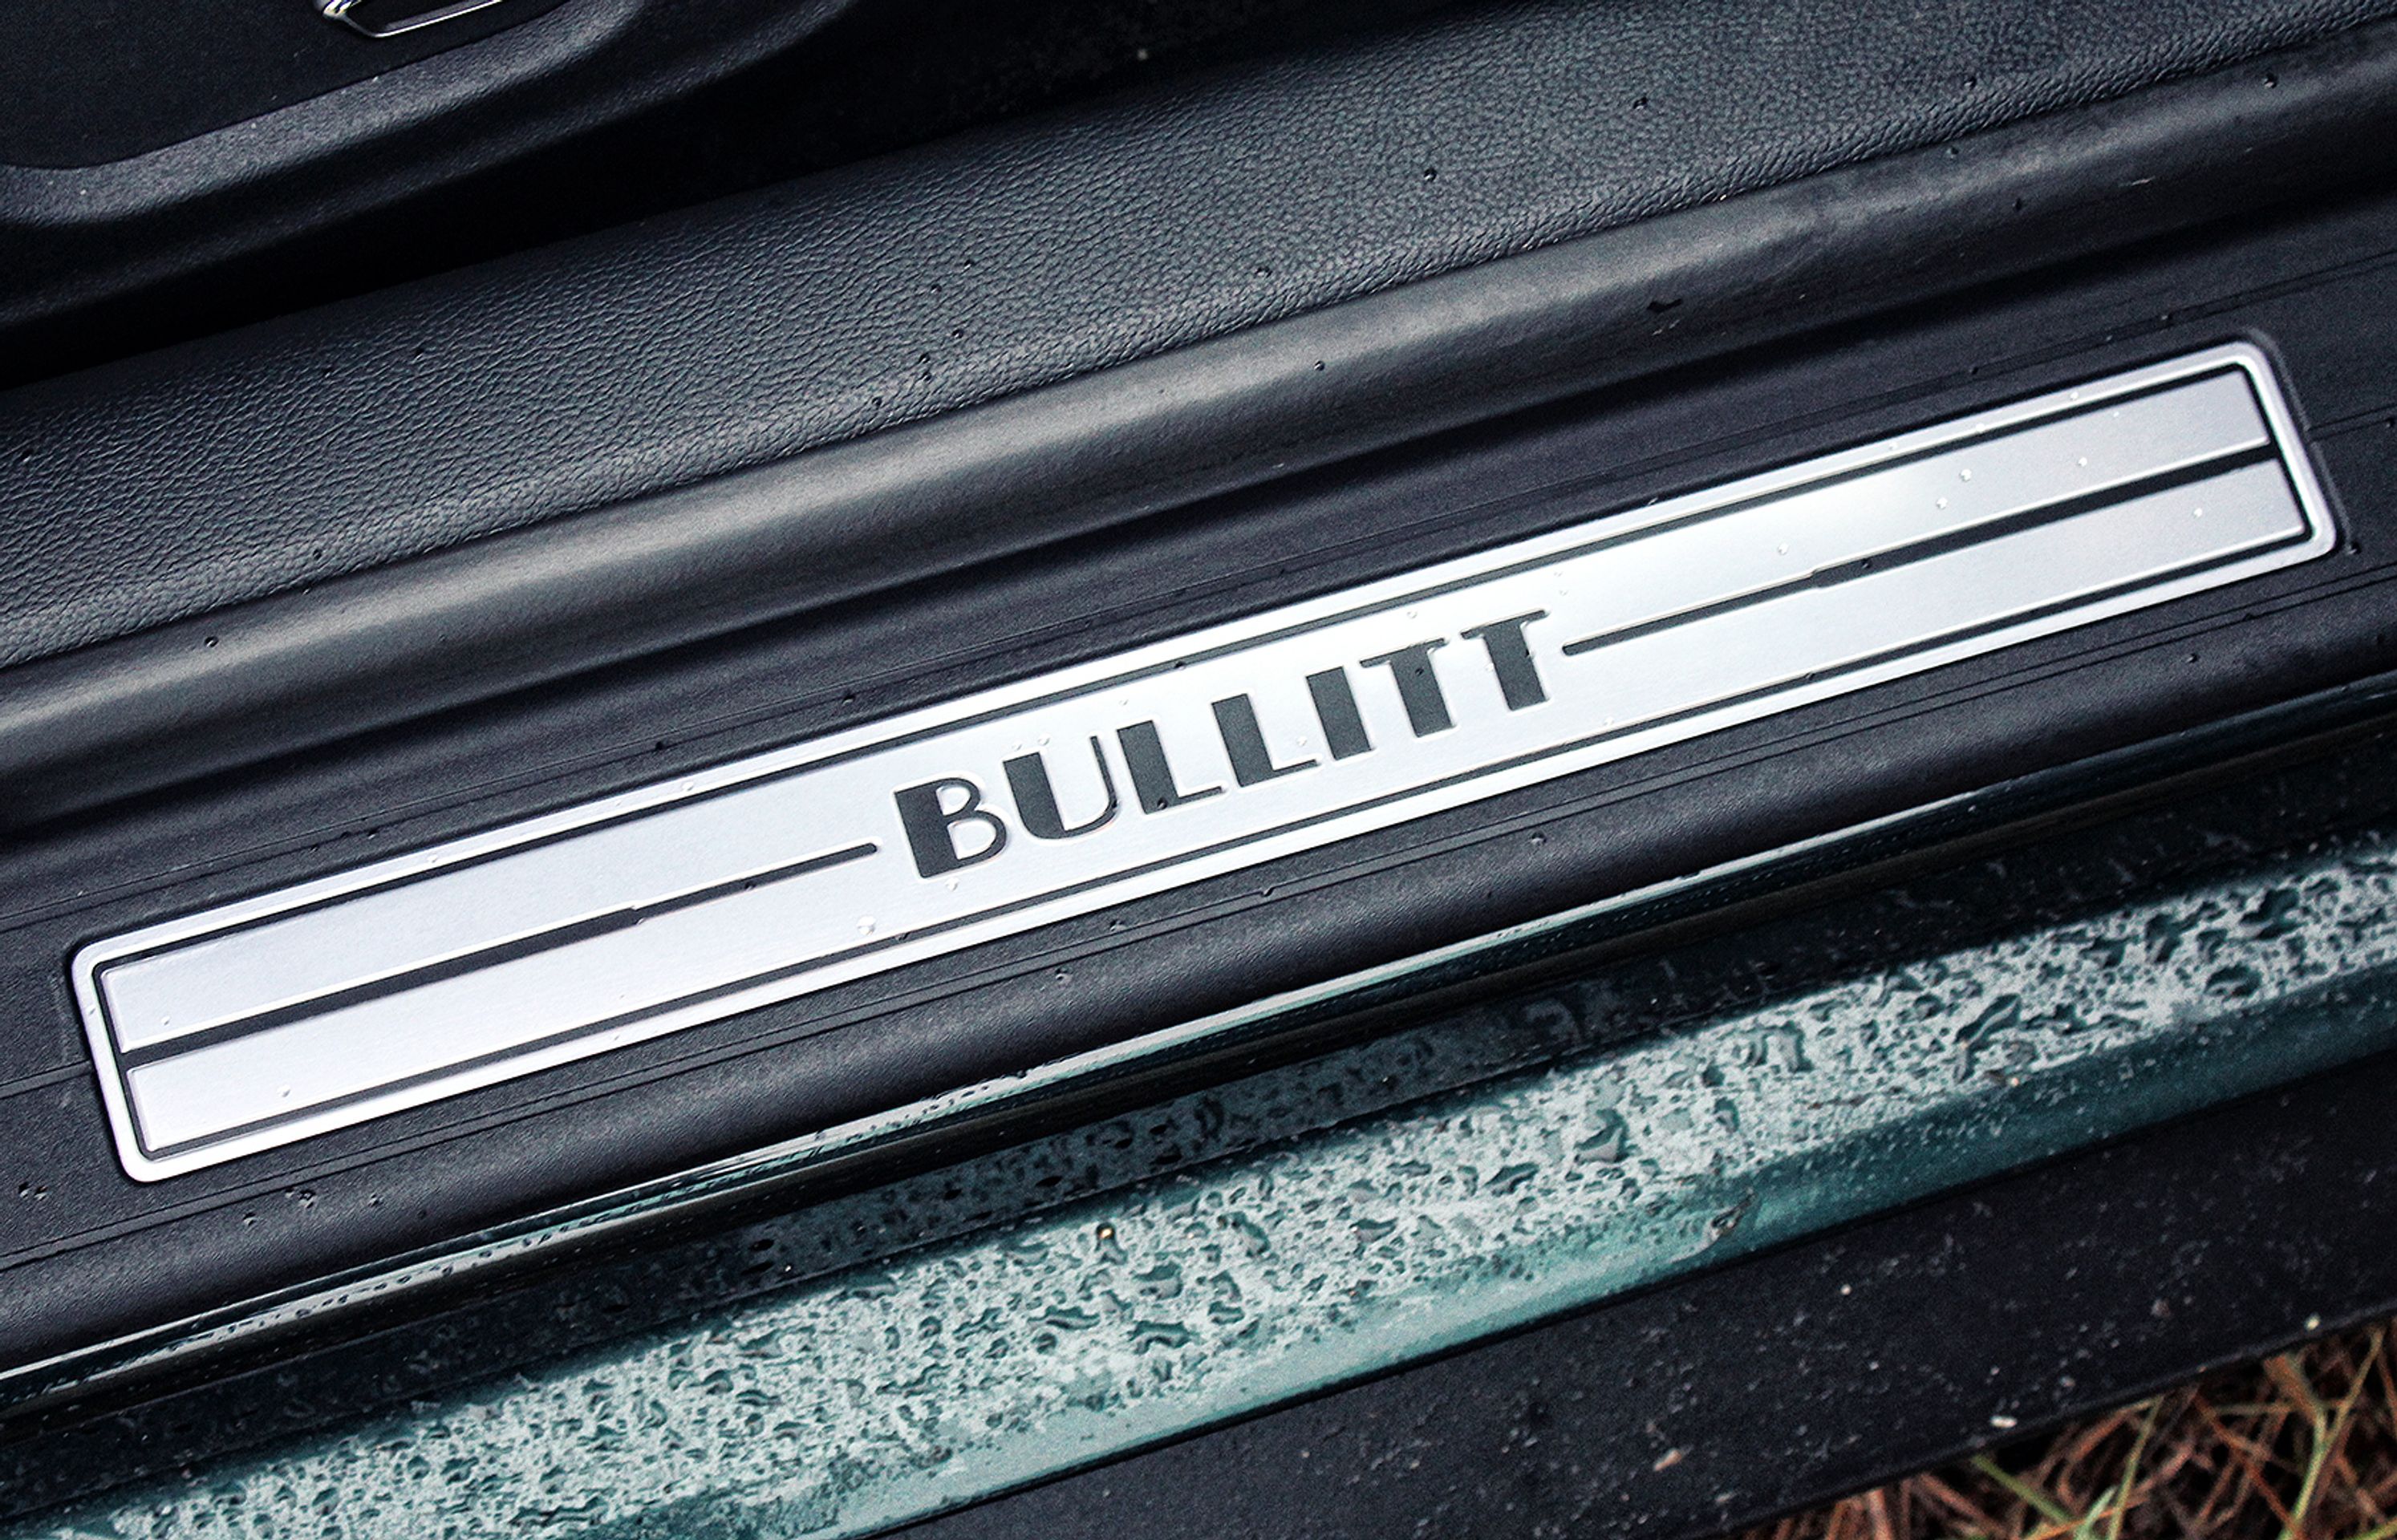 Ford Mustang Bullitt - 64 - Fotogalerie: Legenda v novém kabátě - Ford Mustang Bullitt (17/31)